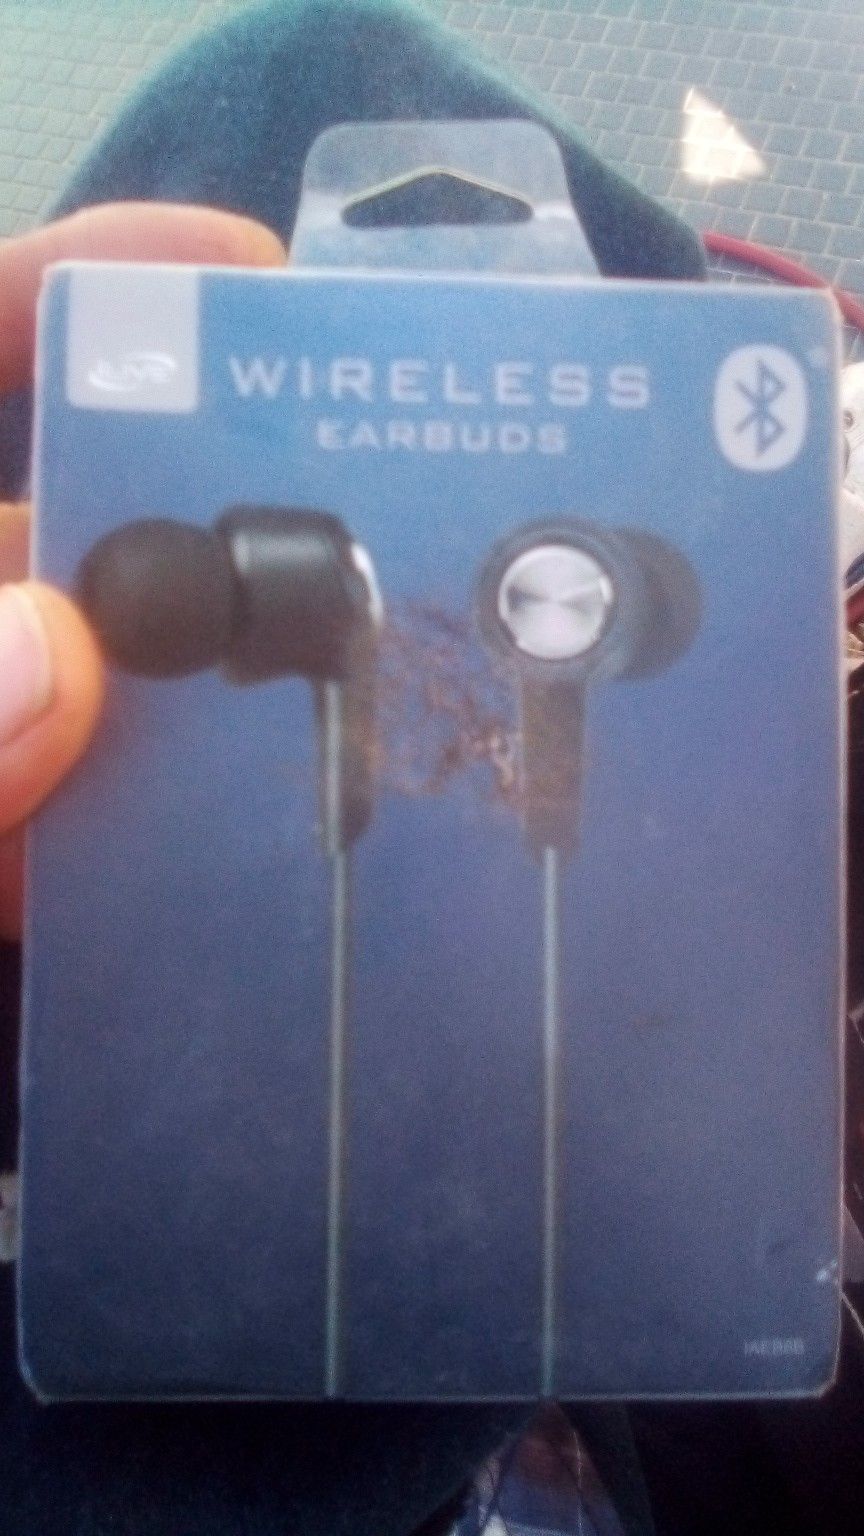 Wireless earbuds new unopened